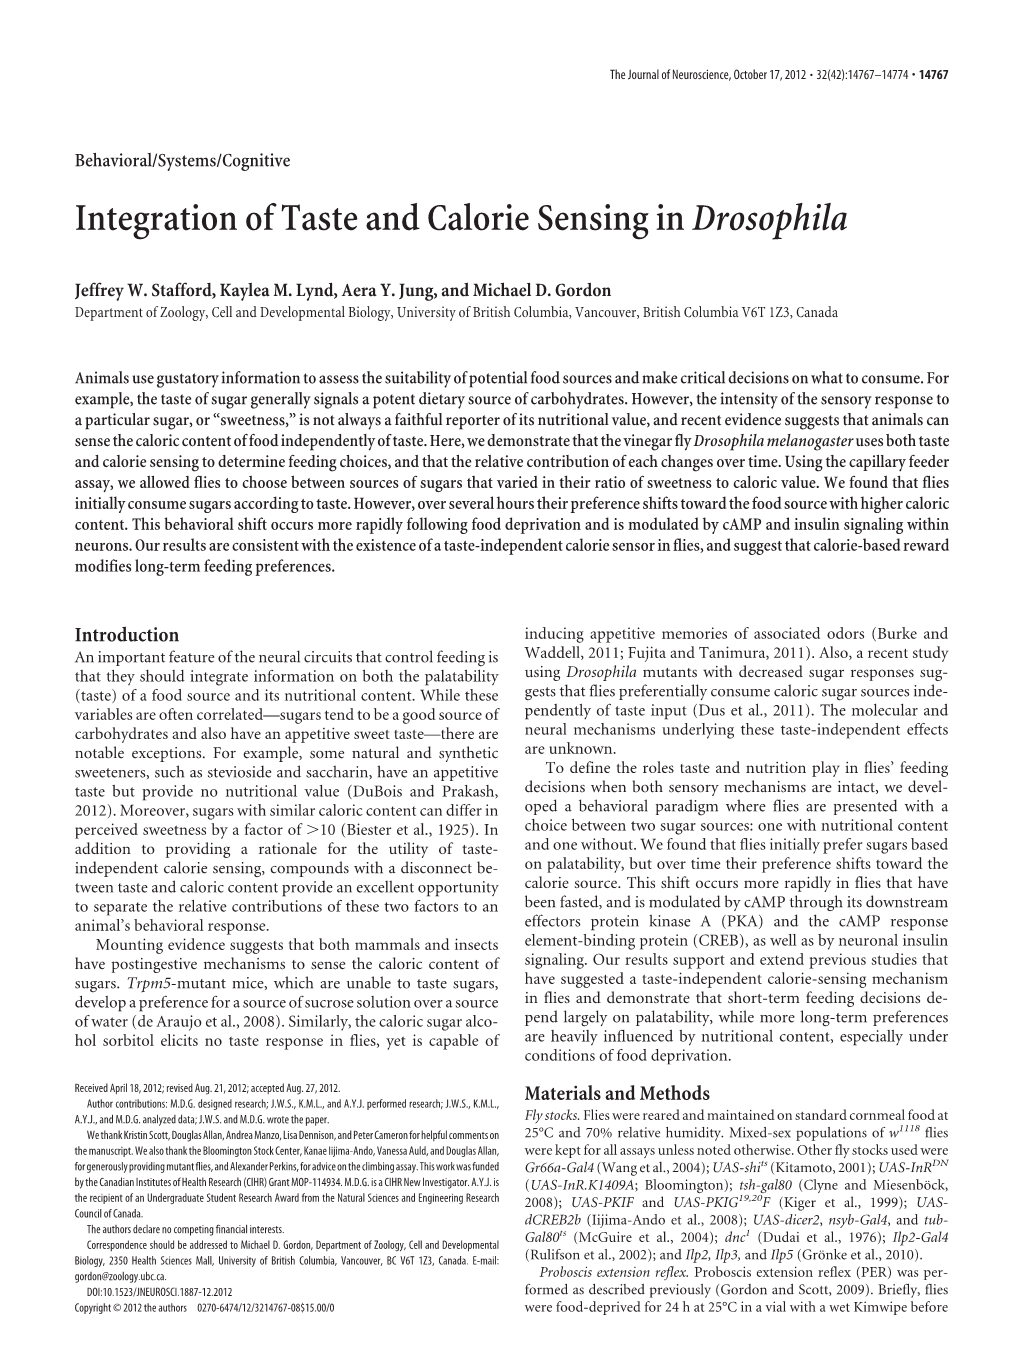 Integration of Taste and Calorie Sensing Indrosophila